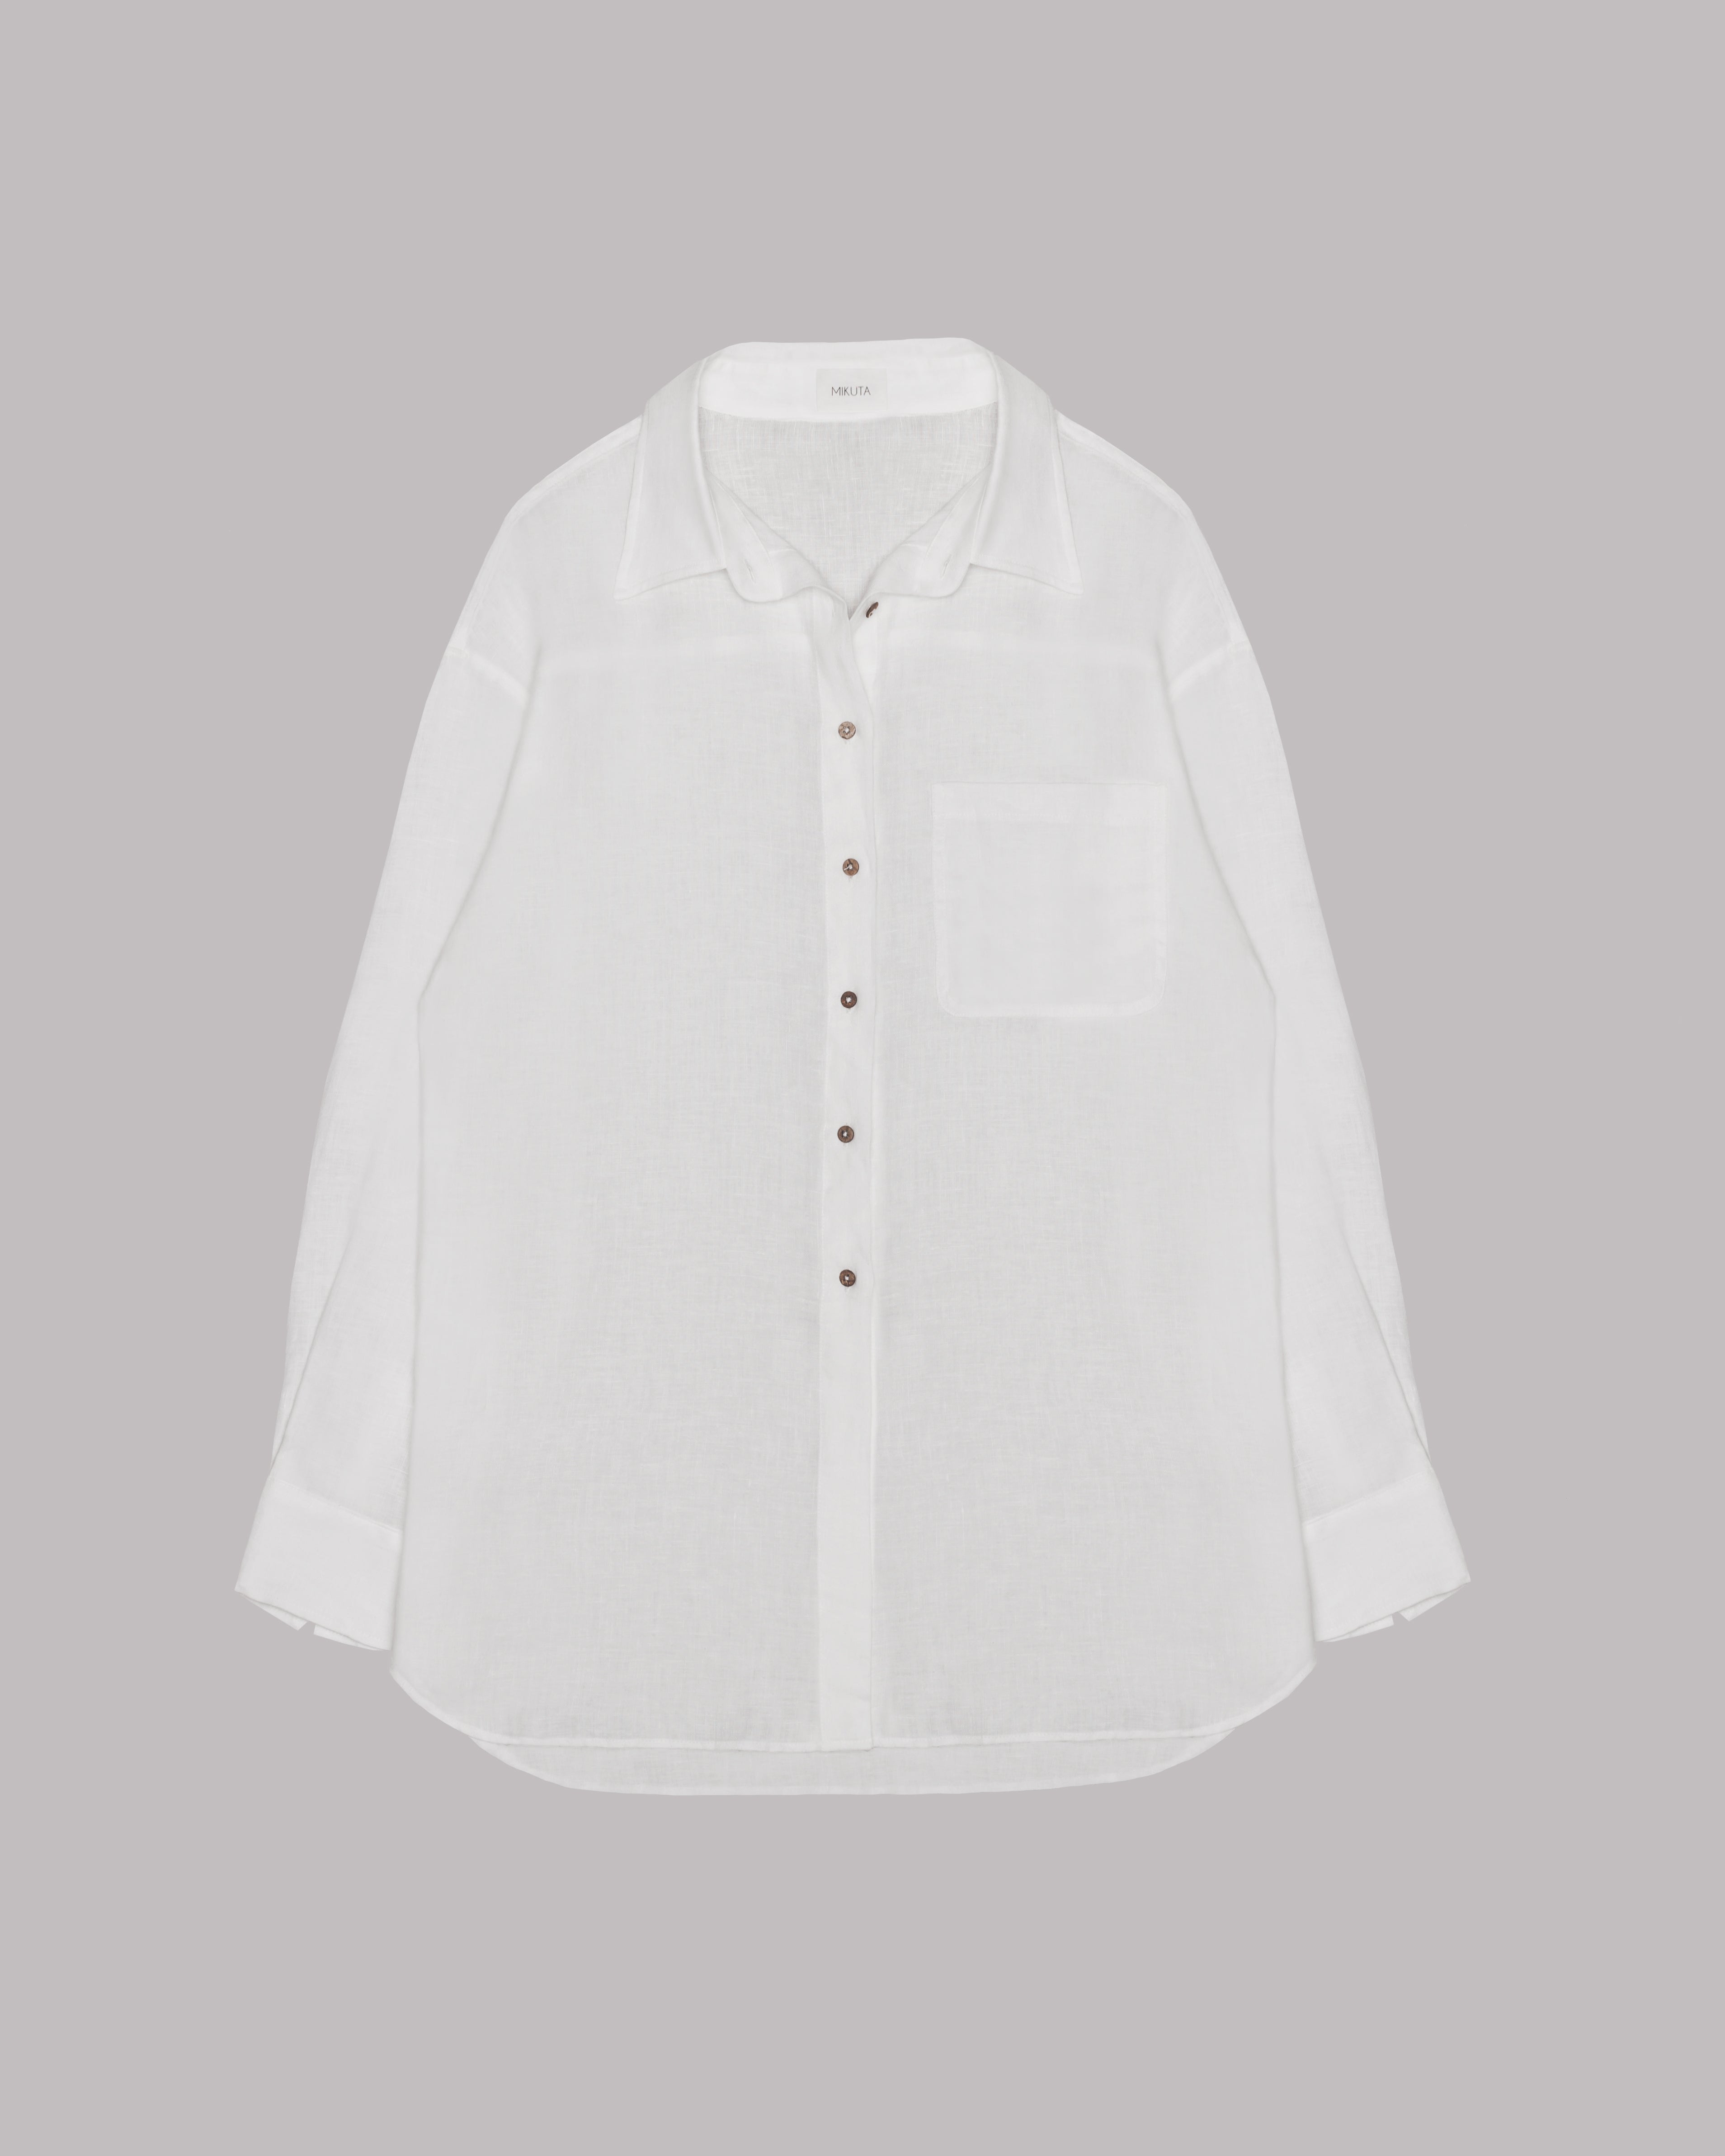 The White Linen Shirt